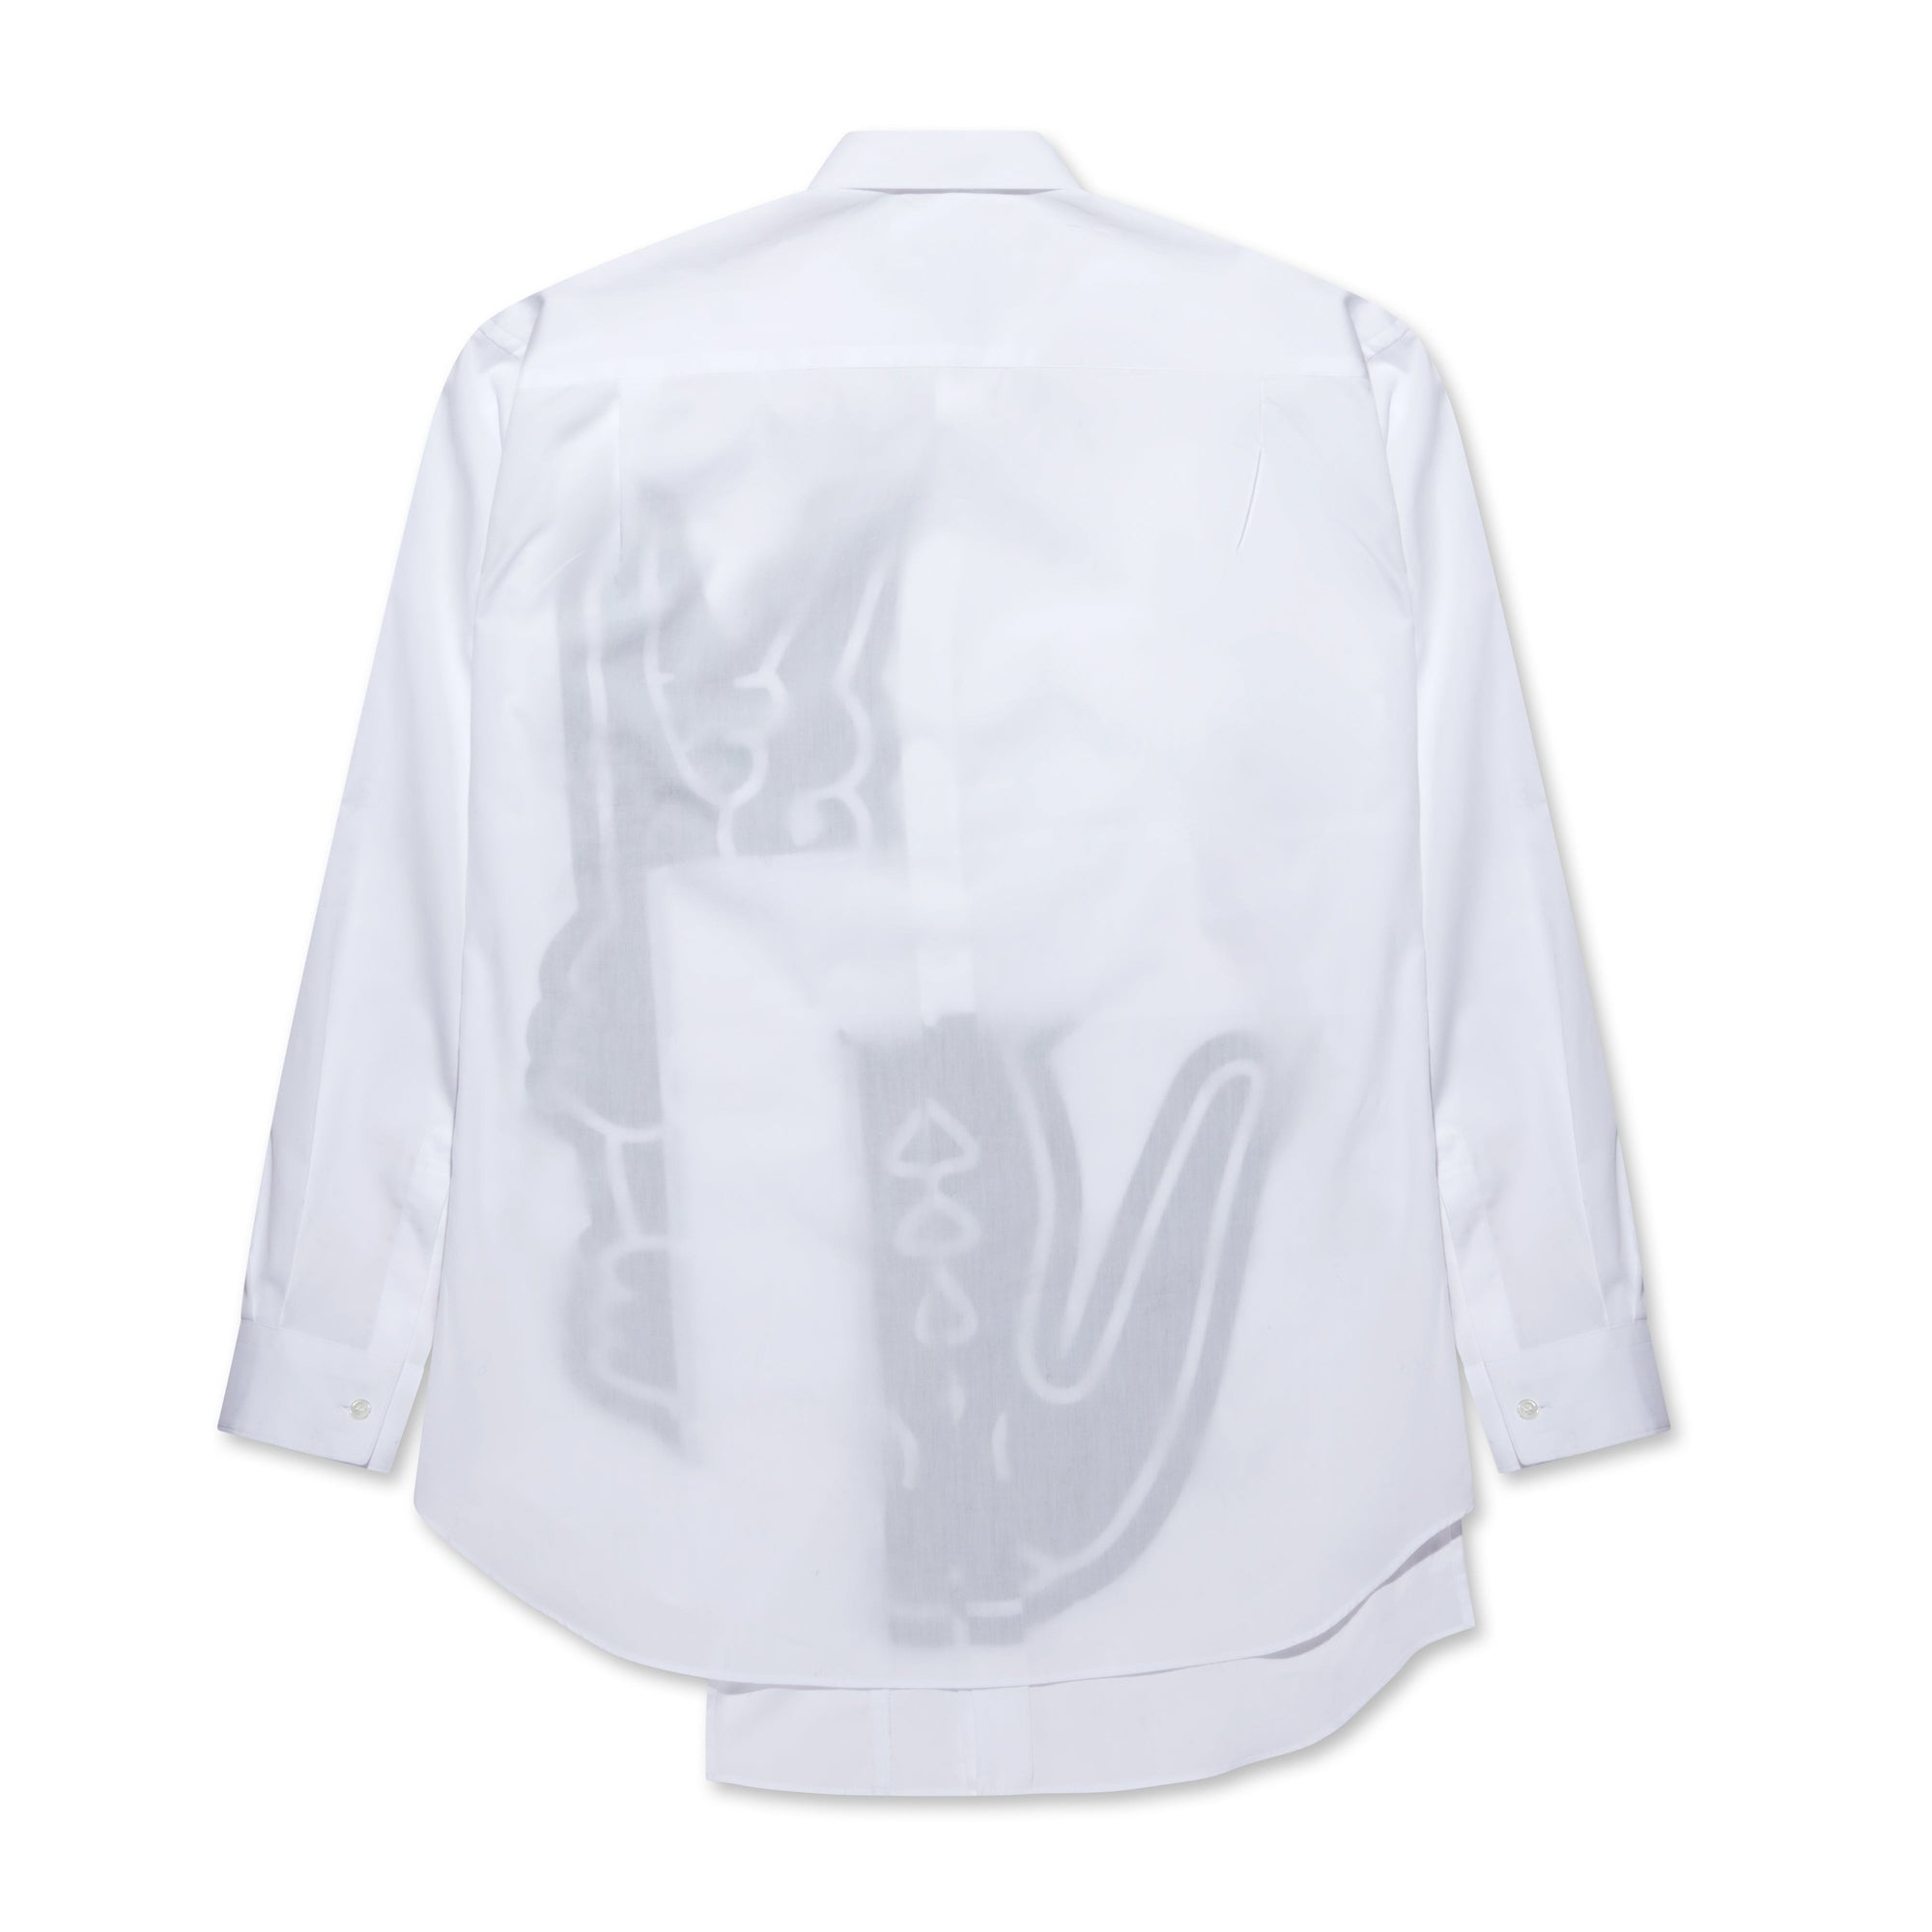 CDG Shirt - Lacoste Men's Shirt - (White) view 7